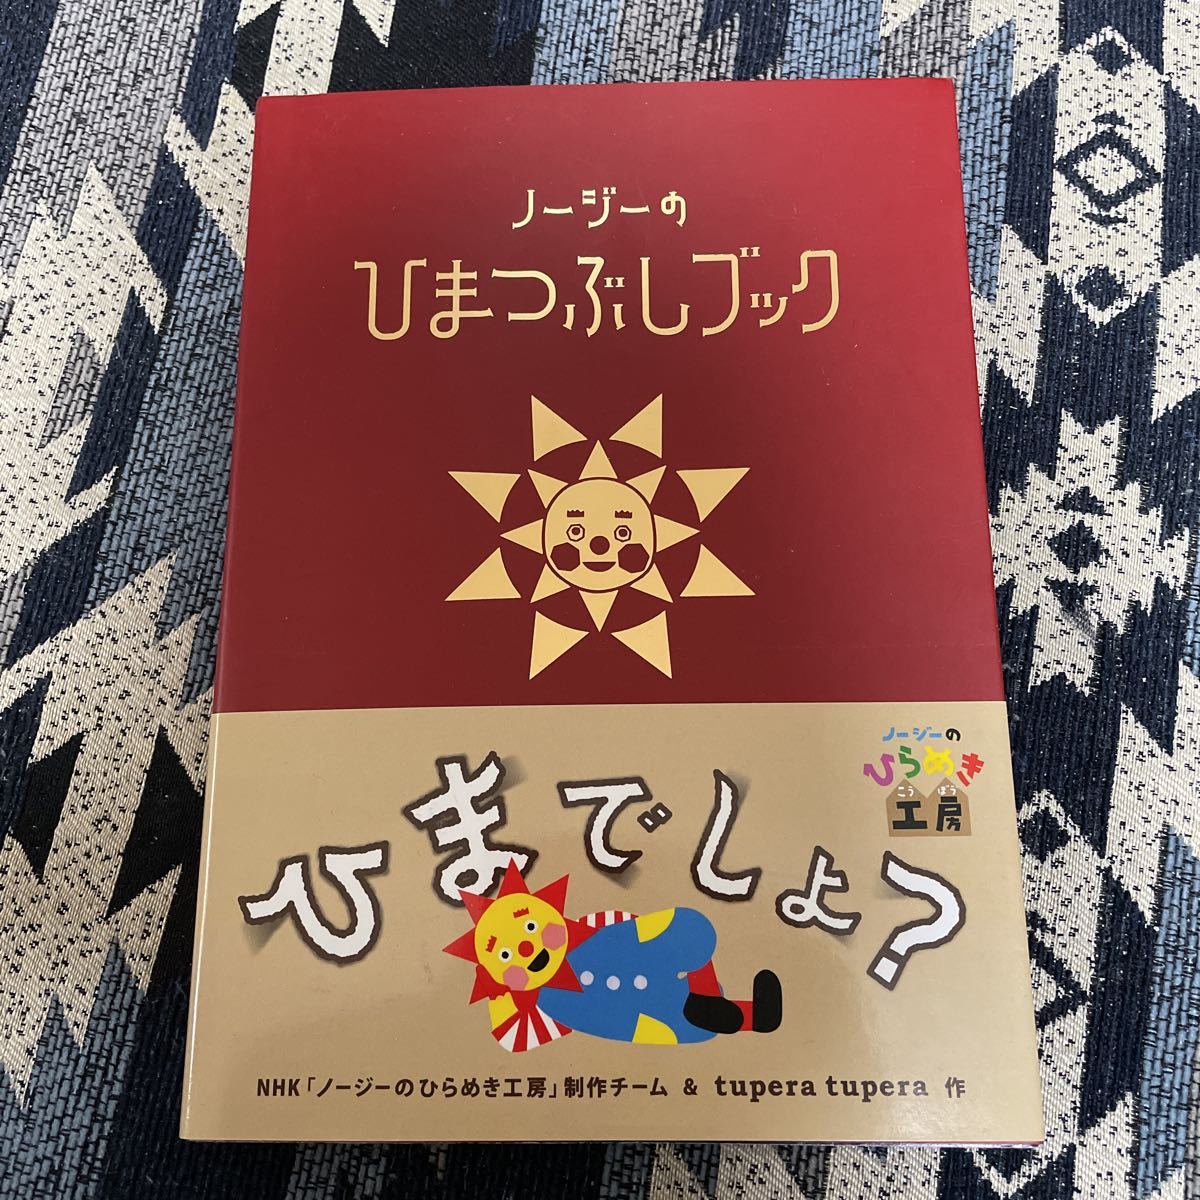 no-ji-. ..... книжка EtereNHKno-ji-. обычный .. ателье произведение команда & tupera tuperatanochi-mi-sina Pooh craft .. san 